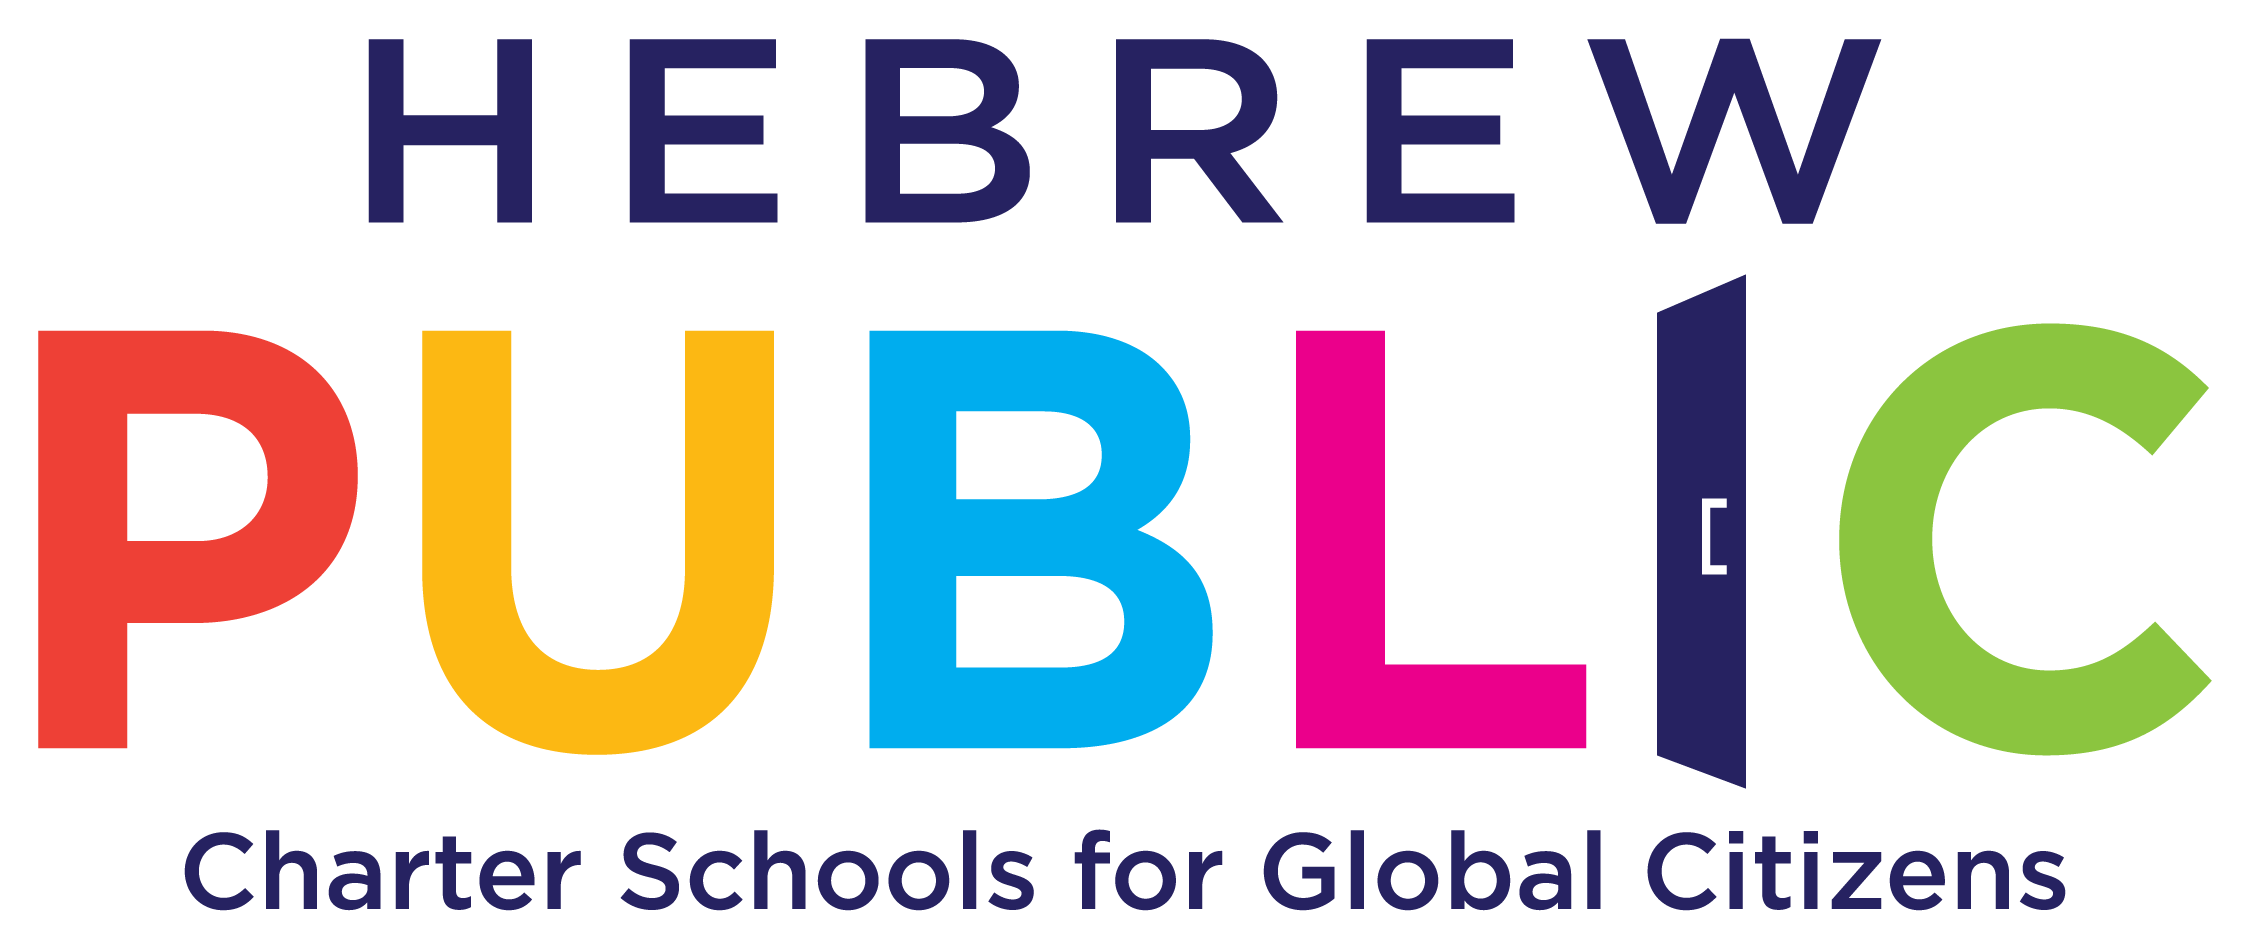 Hebrew Public Charter Schools